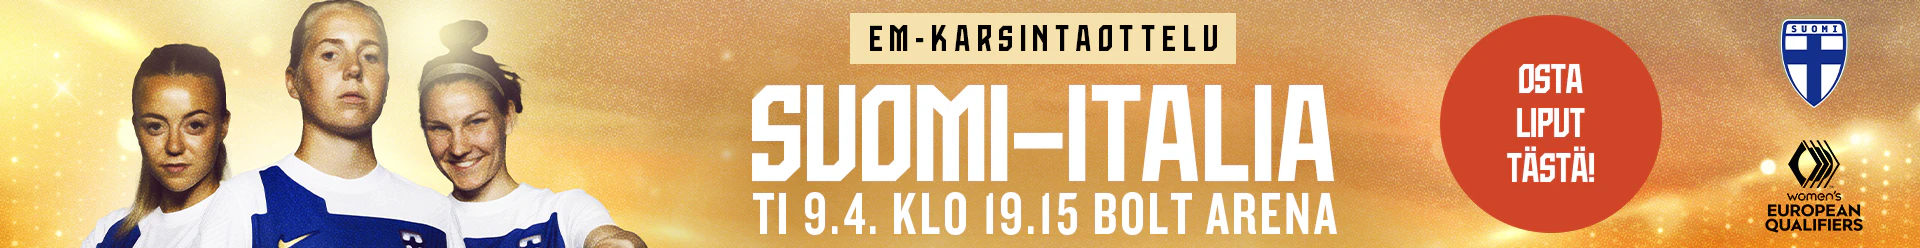 Ostal liput Helmareiden EM-karsintaotteluun Suomi–Italia, TI 9.4. klo 19.15 Helsingin Bolt Arenalla!